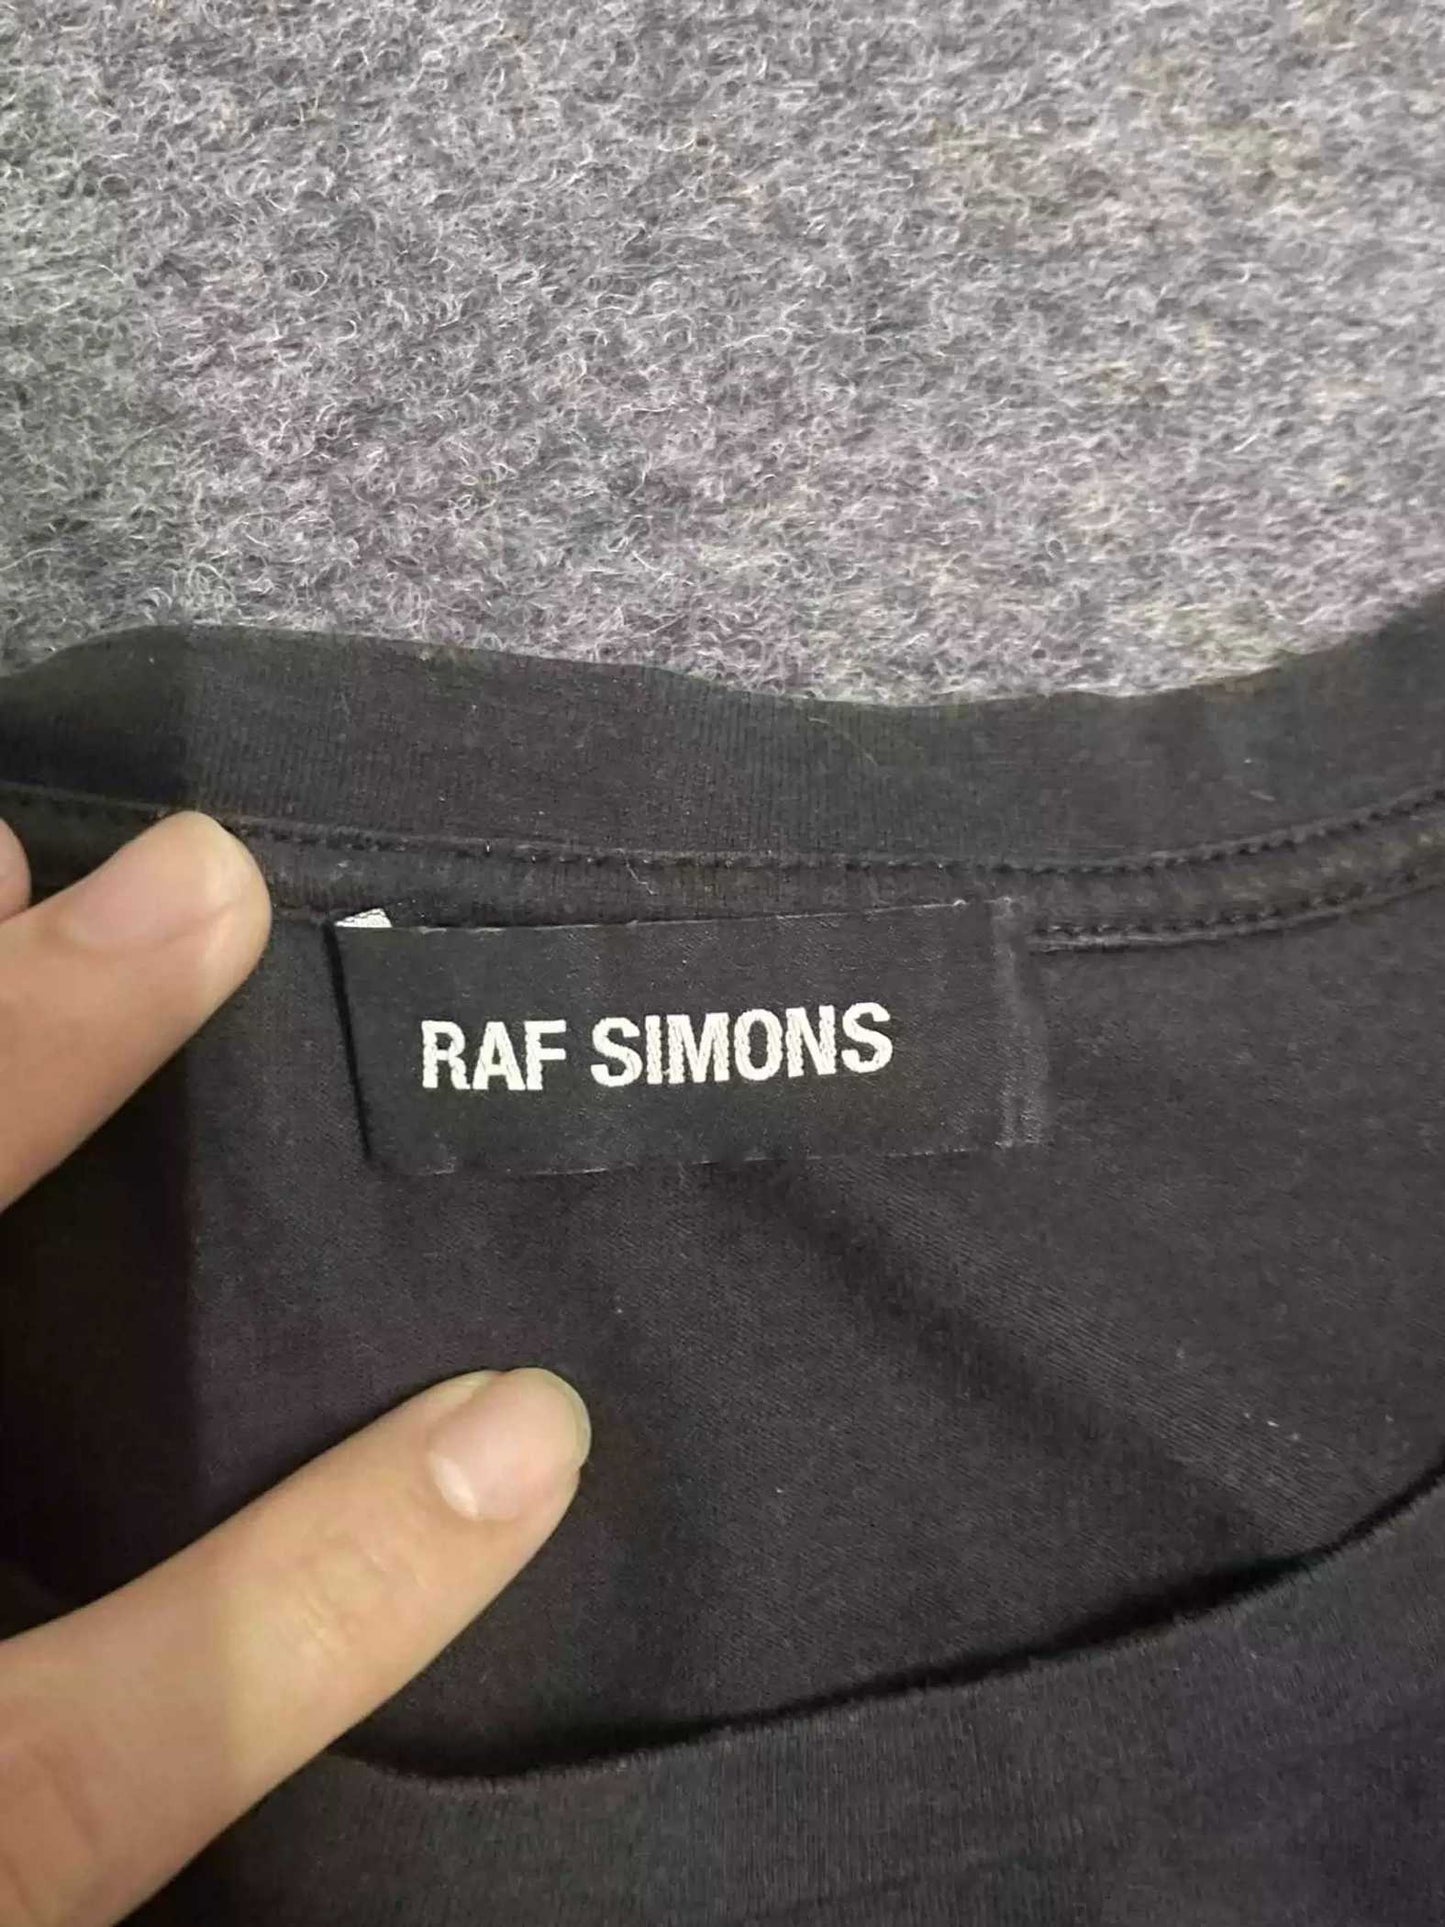 Raf simons portrait t-shirt